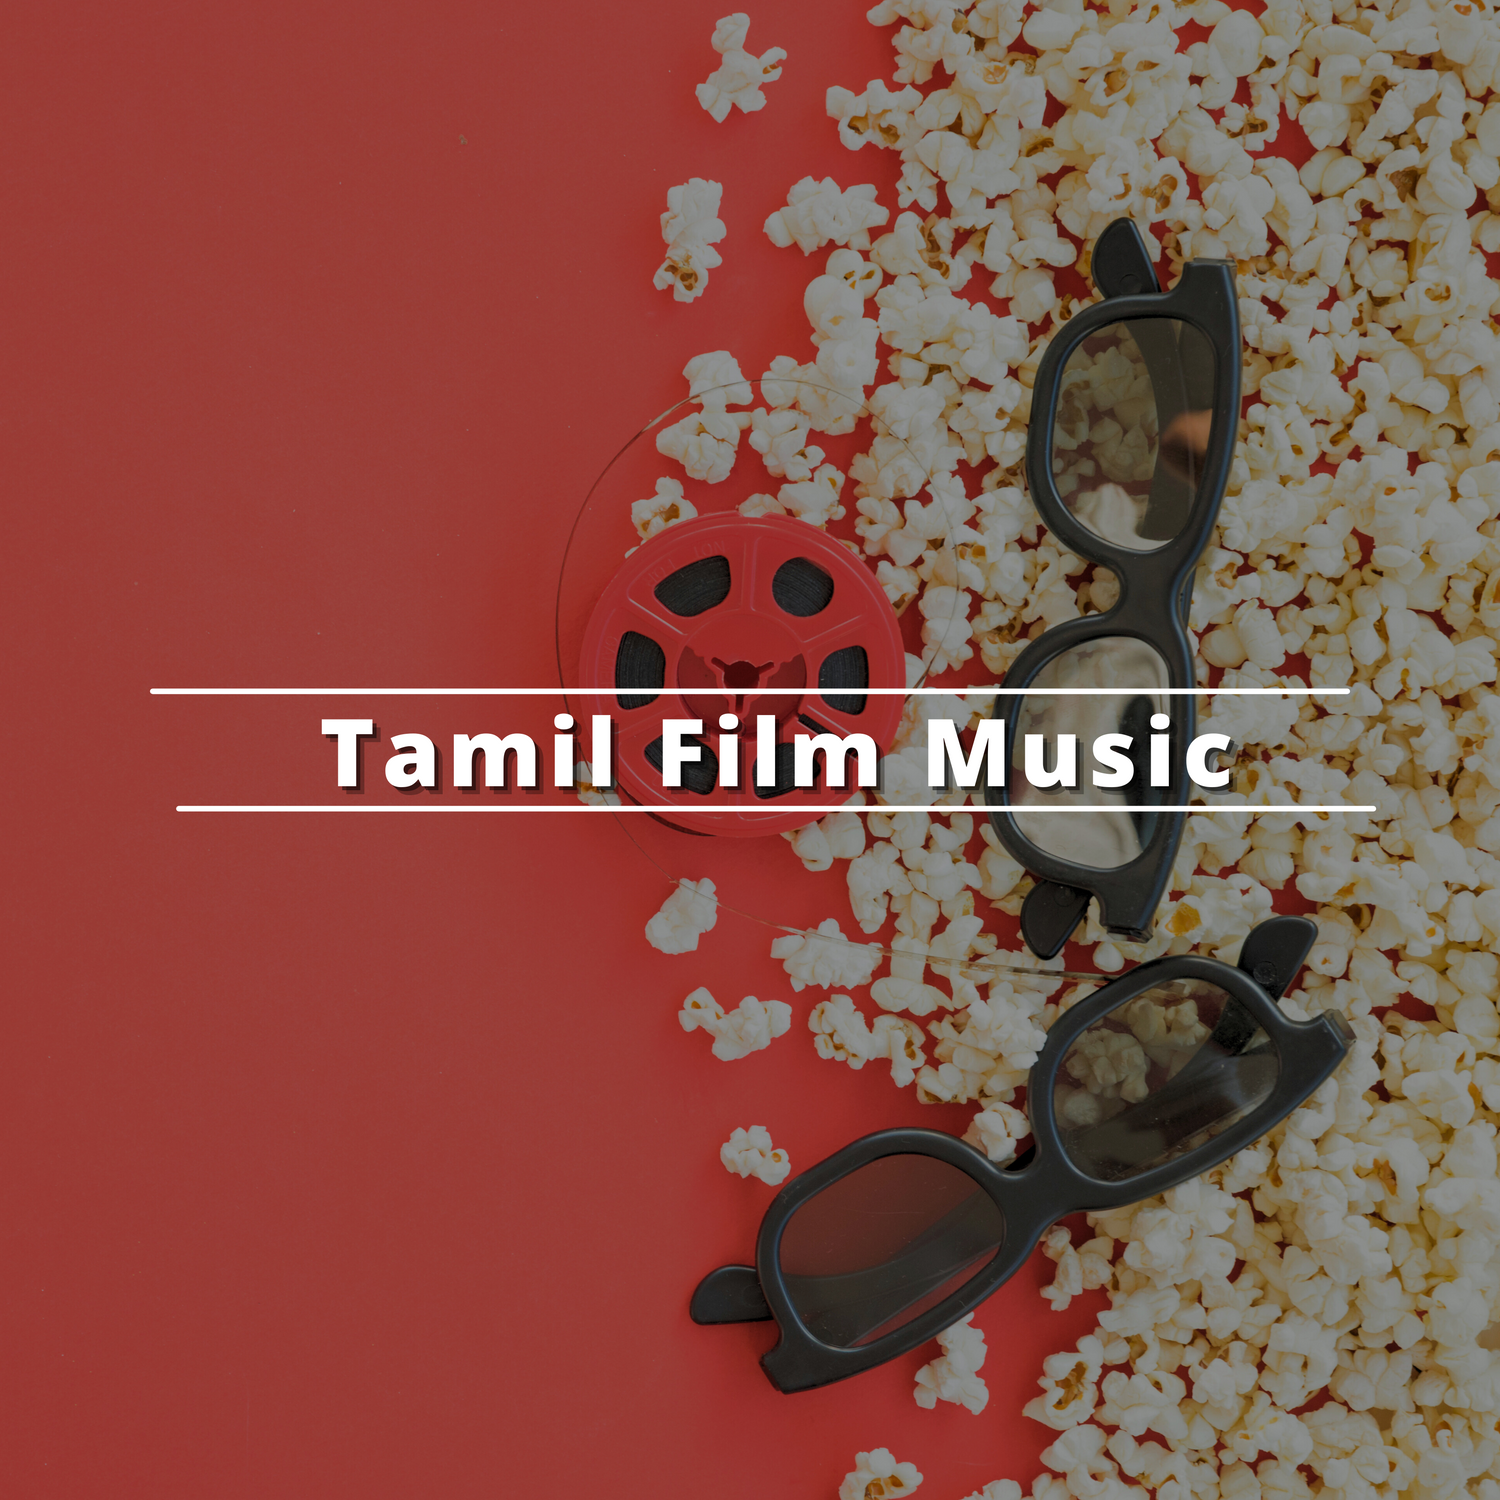 Tamil Film Music